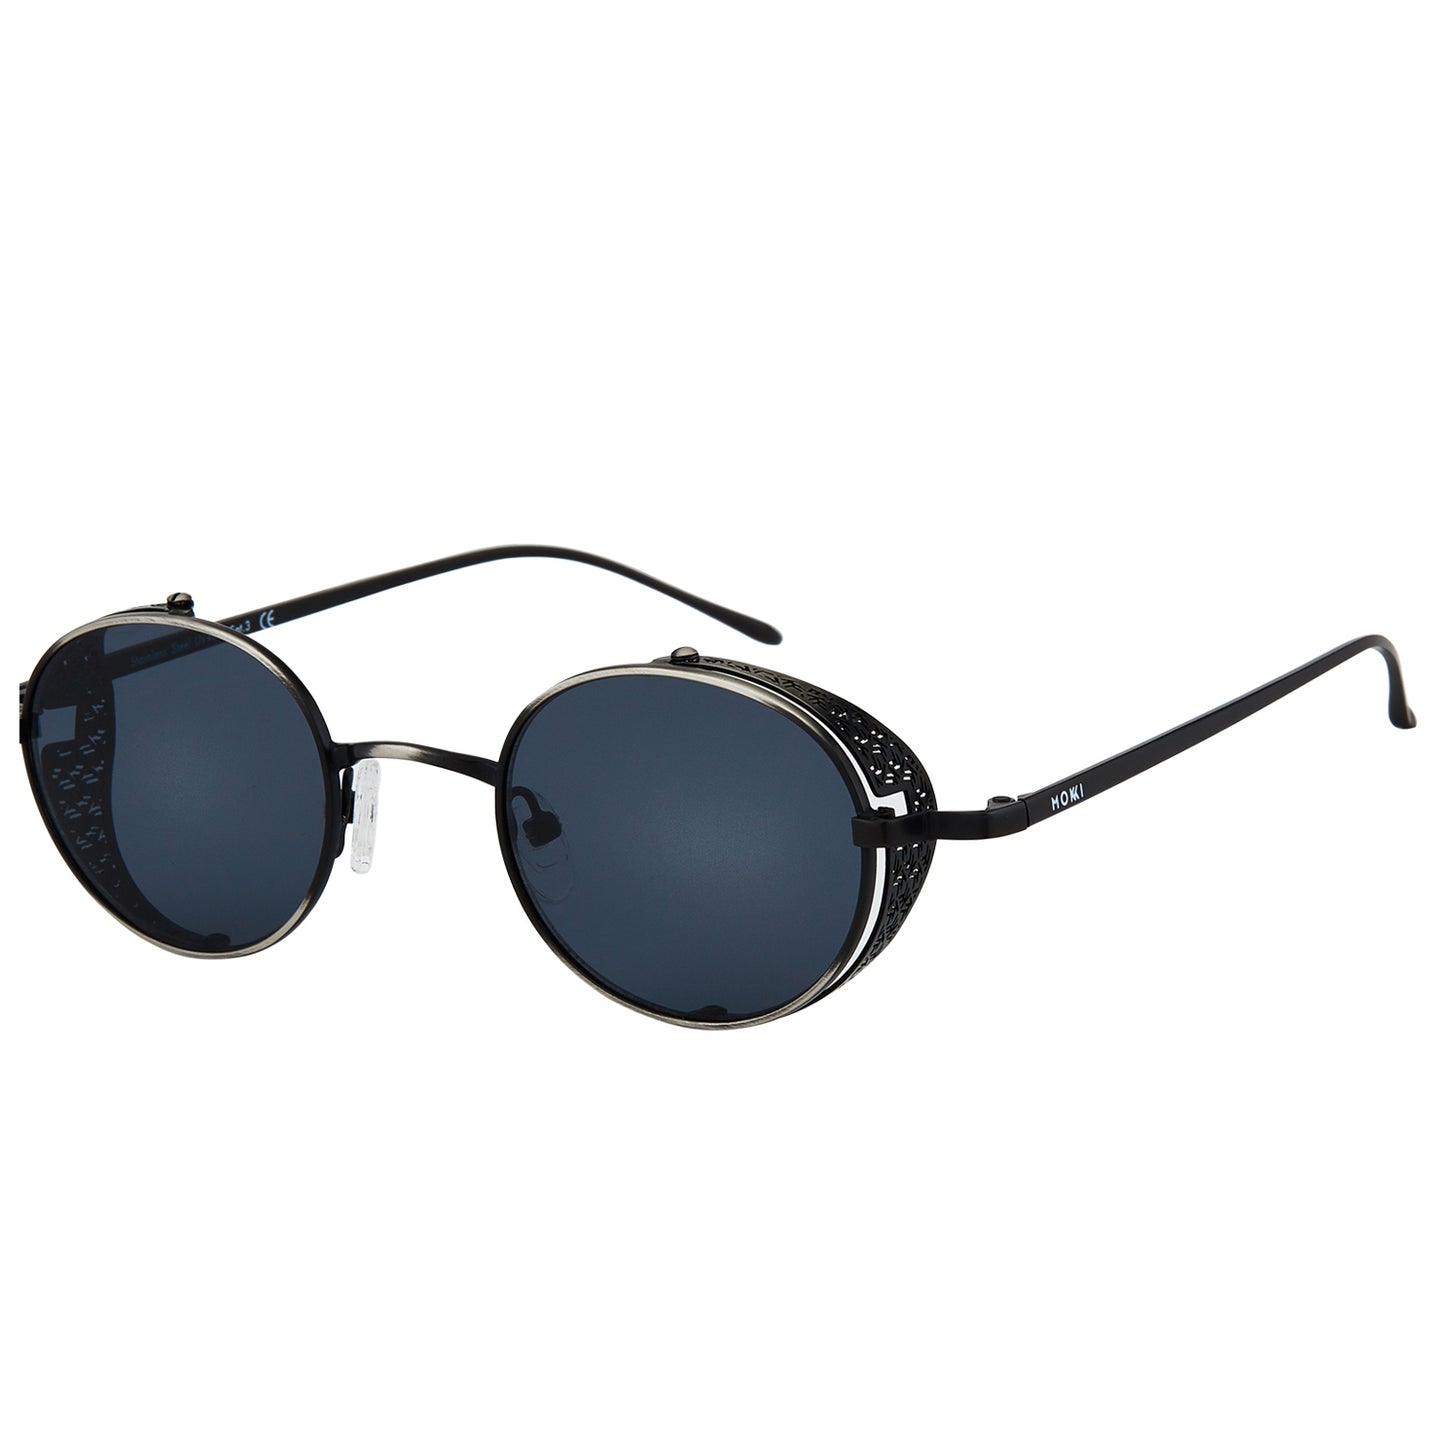 Mokki Round Explorer Sunglasses in Black